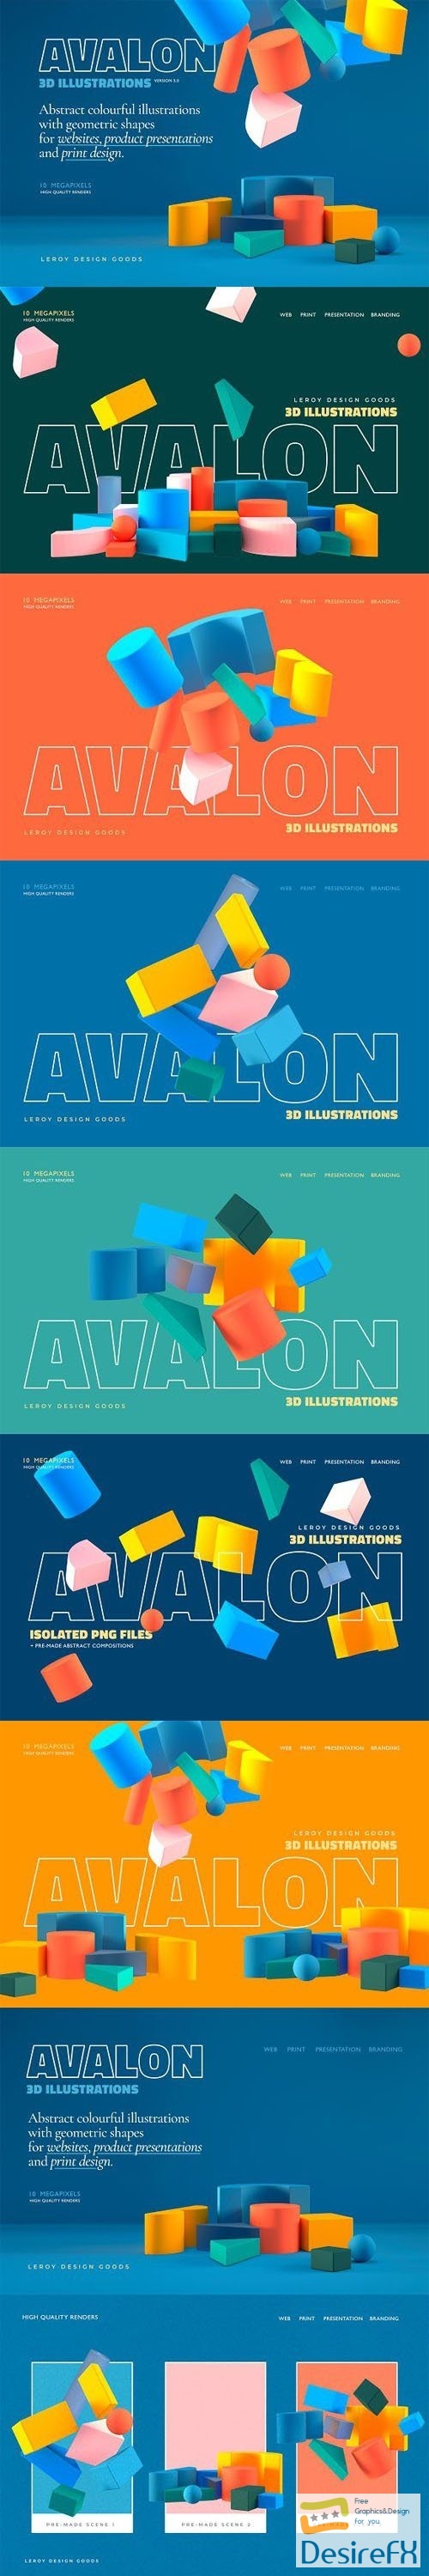 AVALON - 3D Abstract Shapes Illustrations v5|